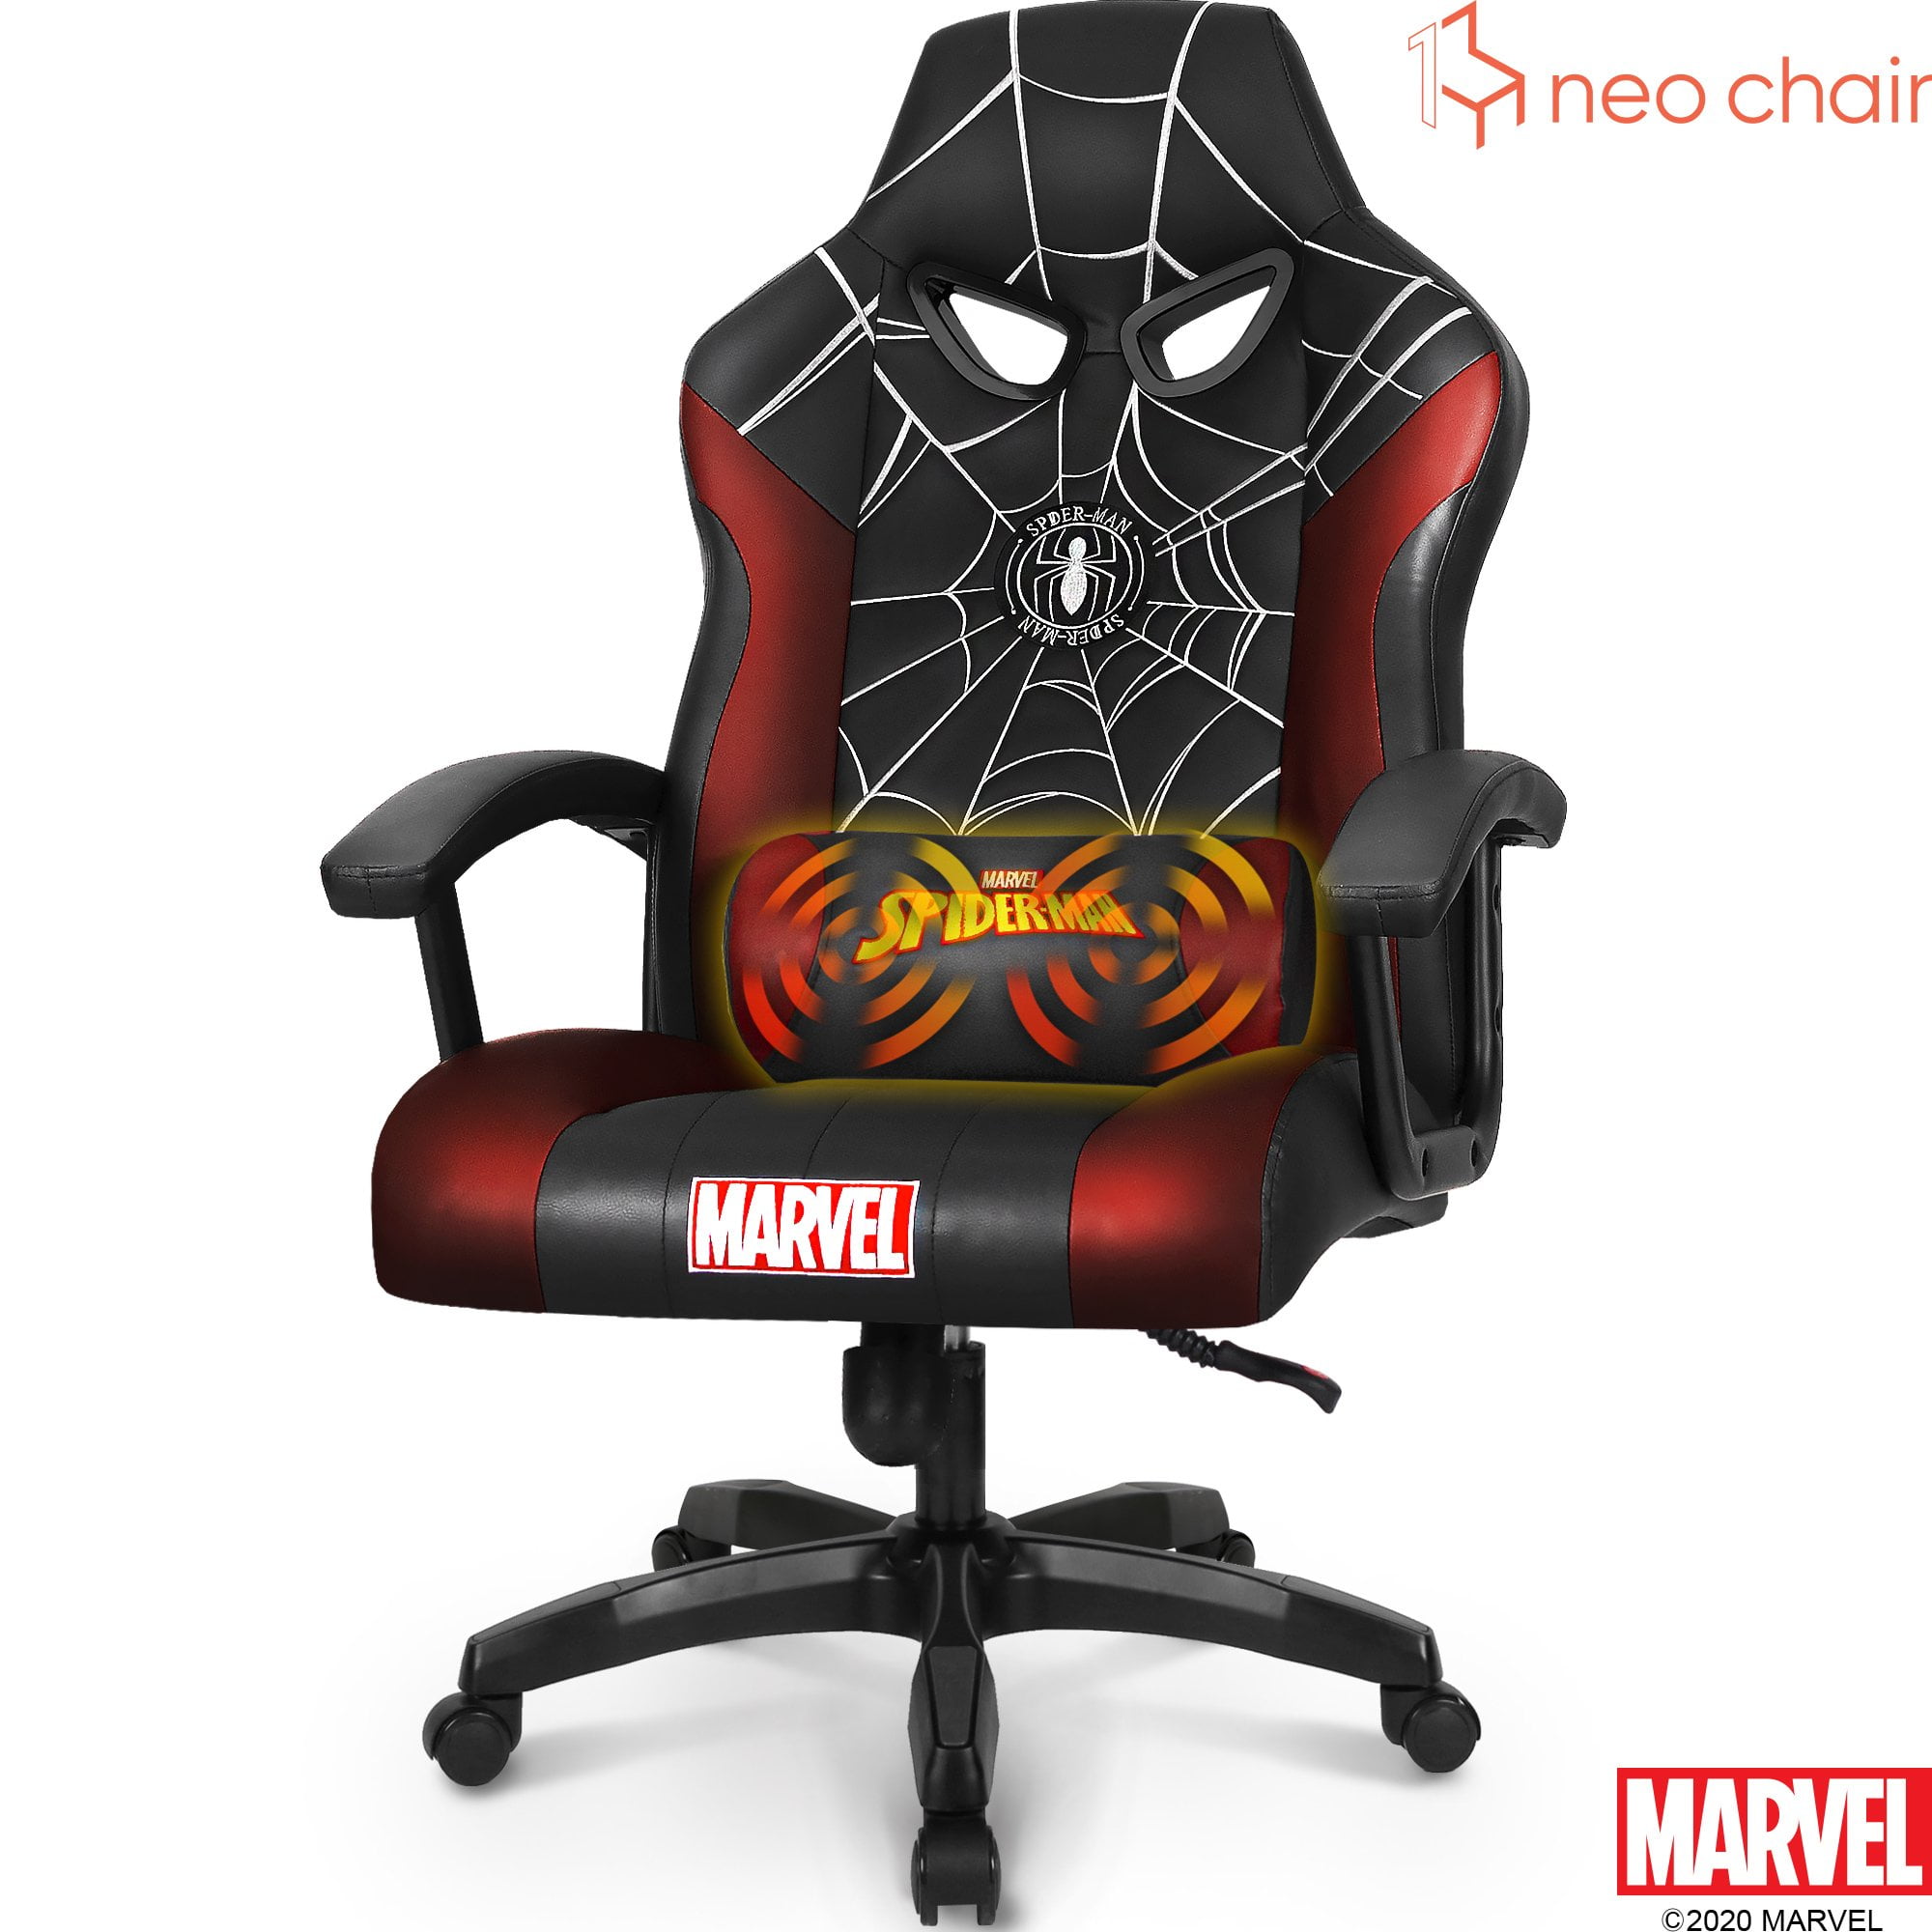 Neo Chair MARVEL Supreme Series Ergonomic HighBack Gaming